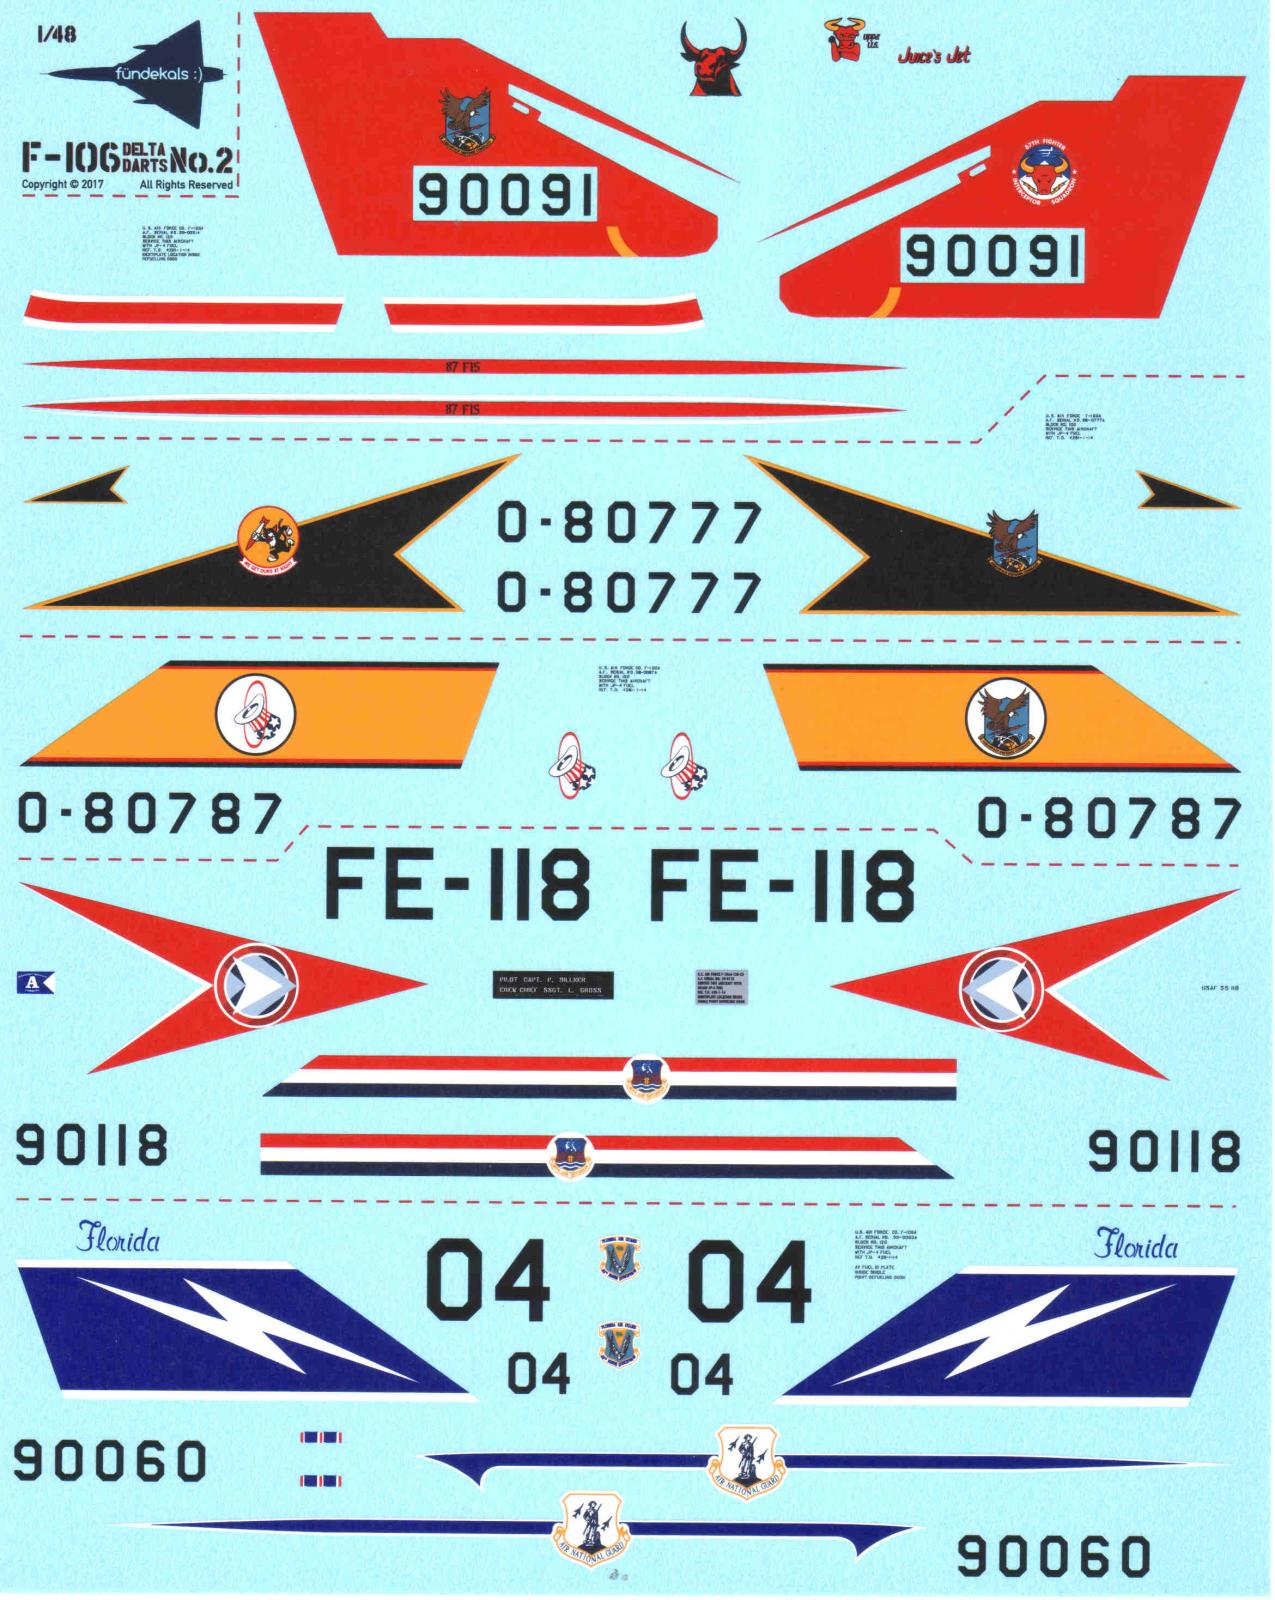 Pt 2 Fundekals 1/48 scale decals for Convair F-106 Delta Dart kits FUN48010 